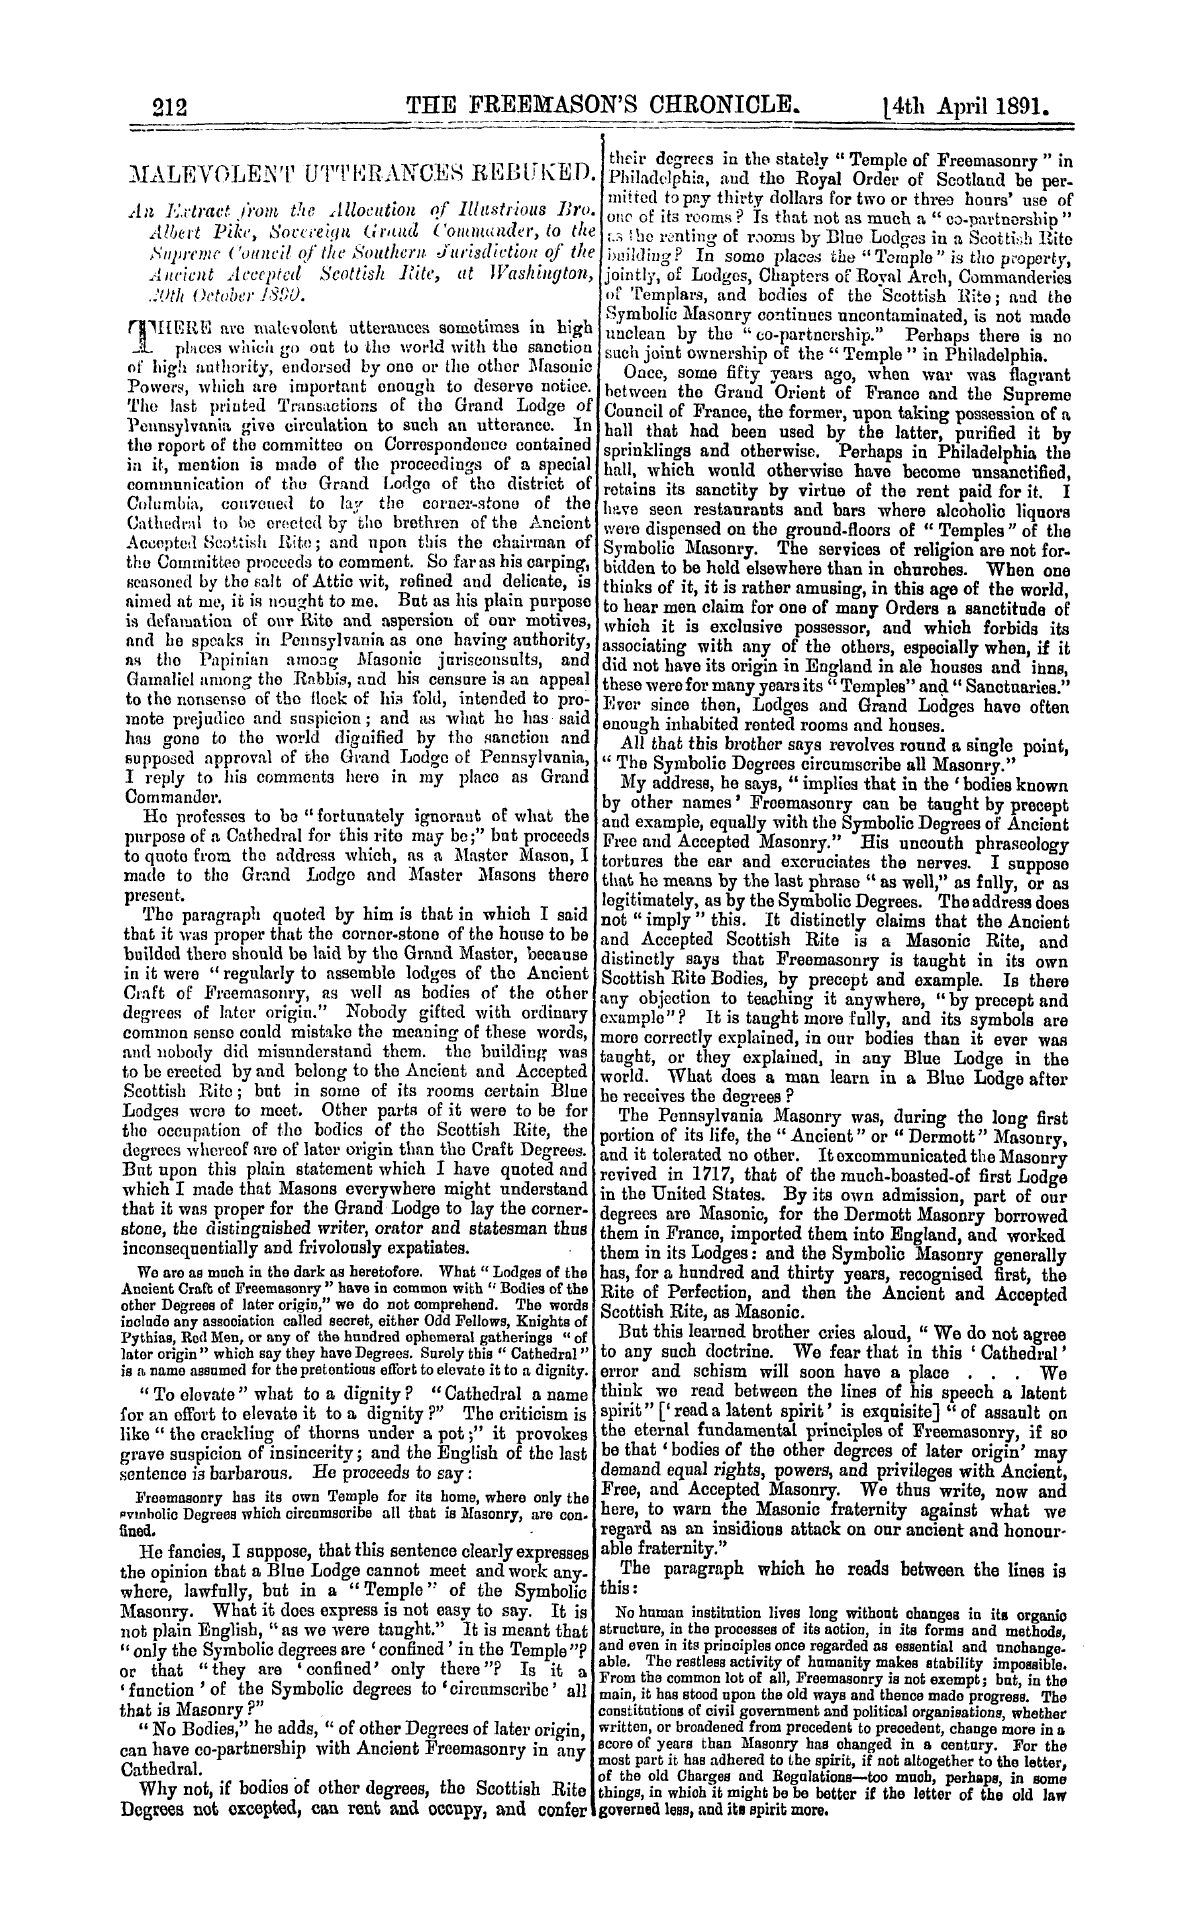 The Freemason's Chronicle: 1891-04-04: 4